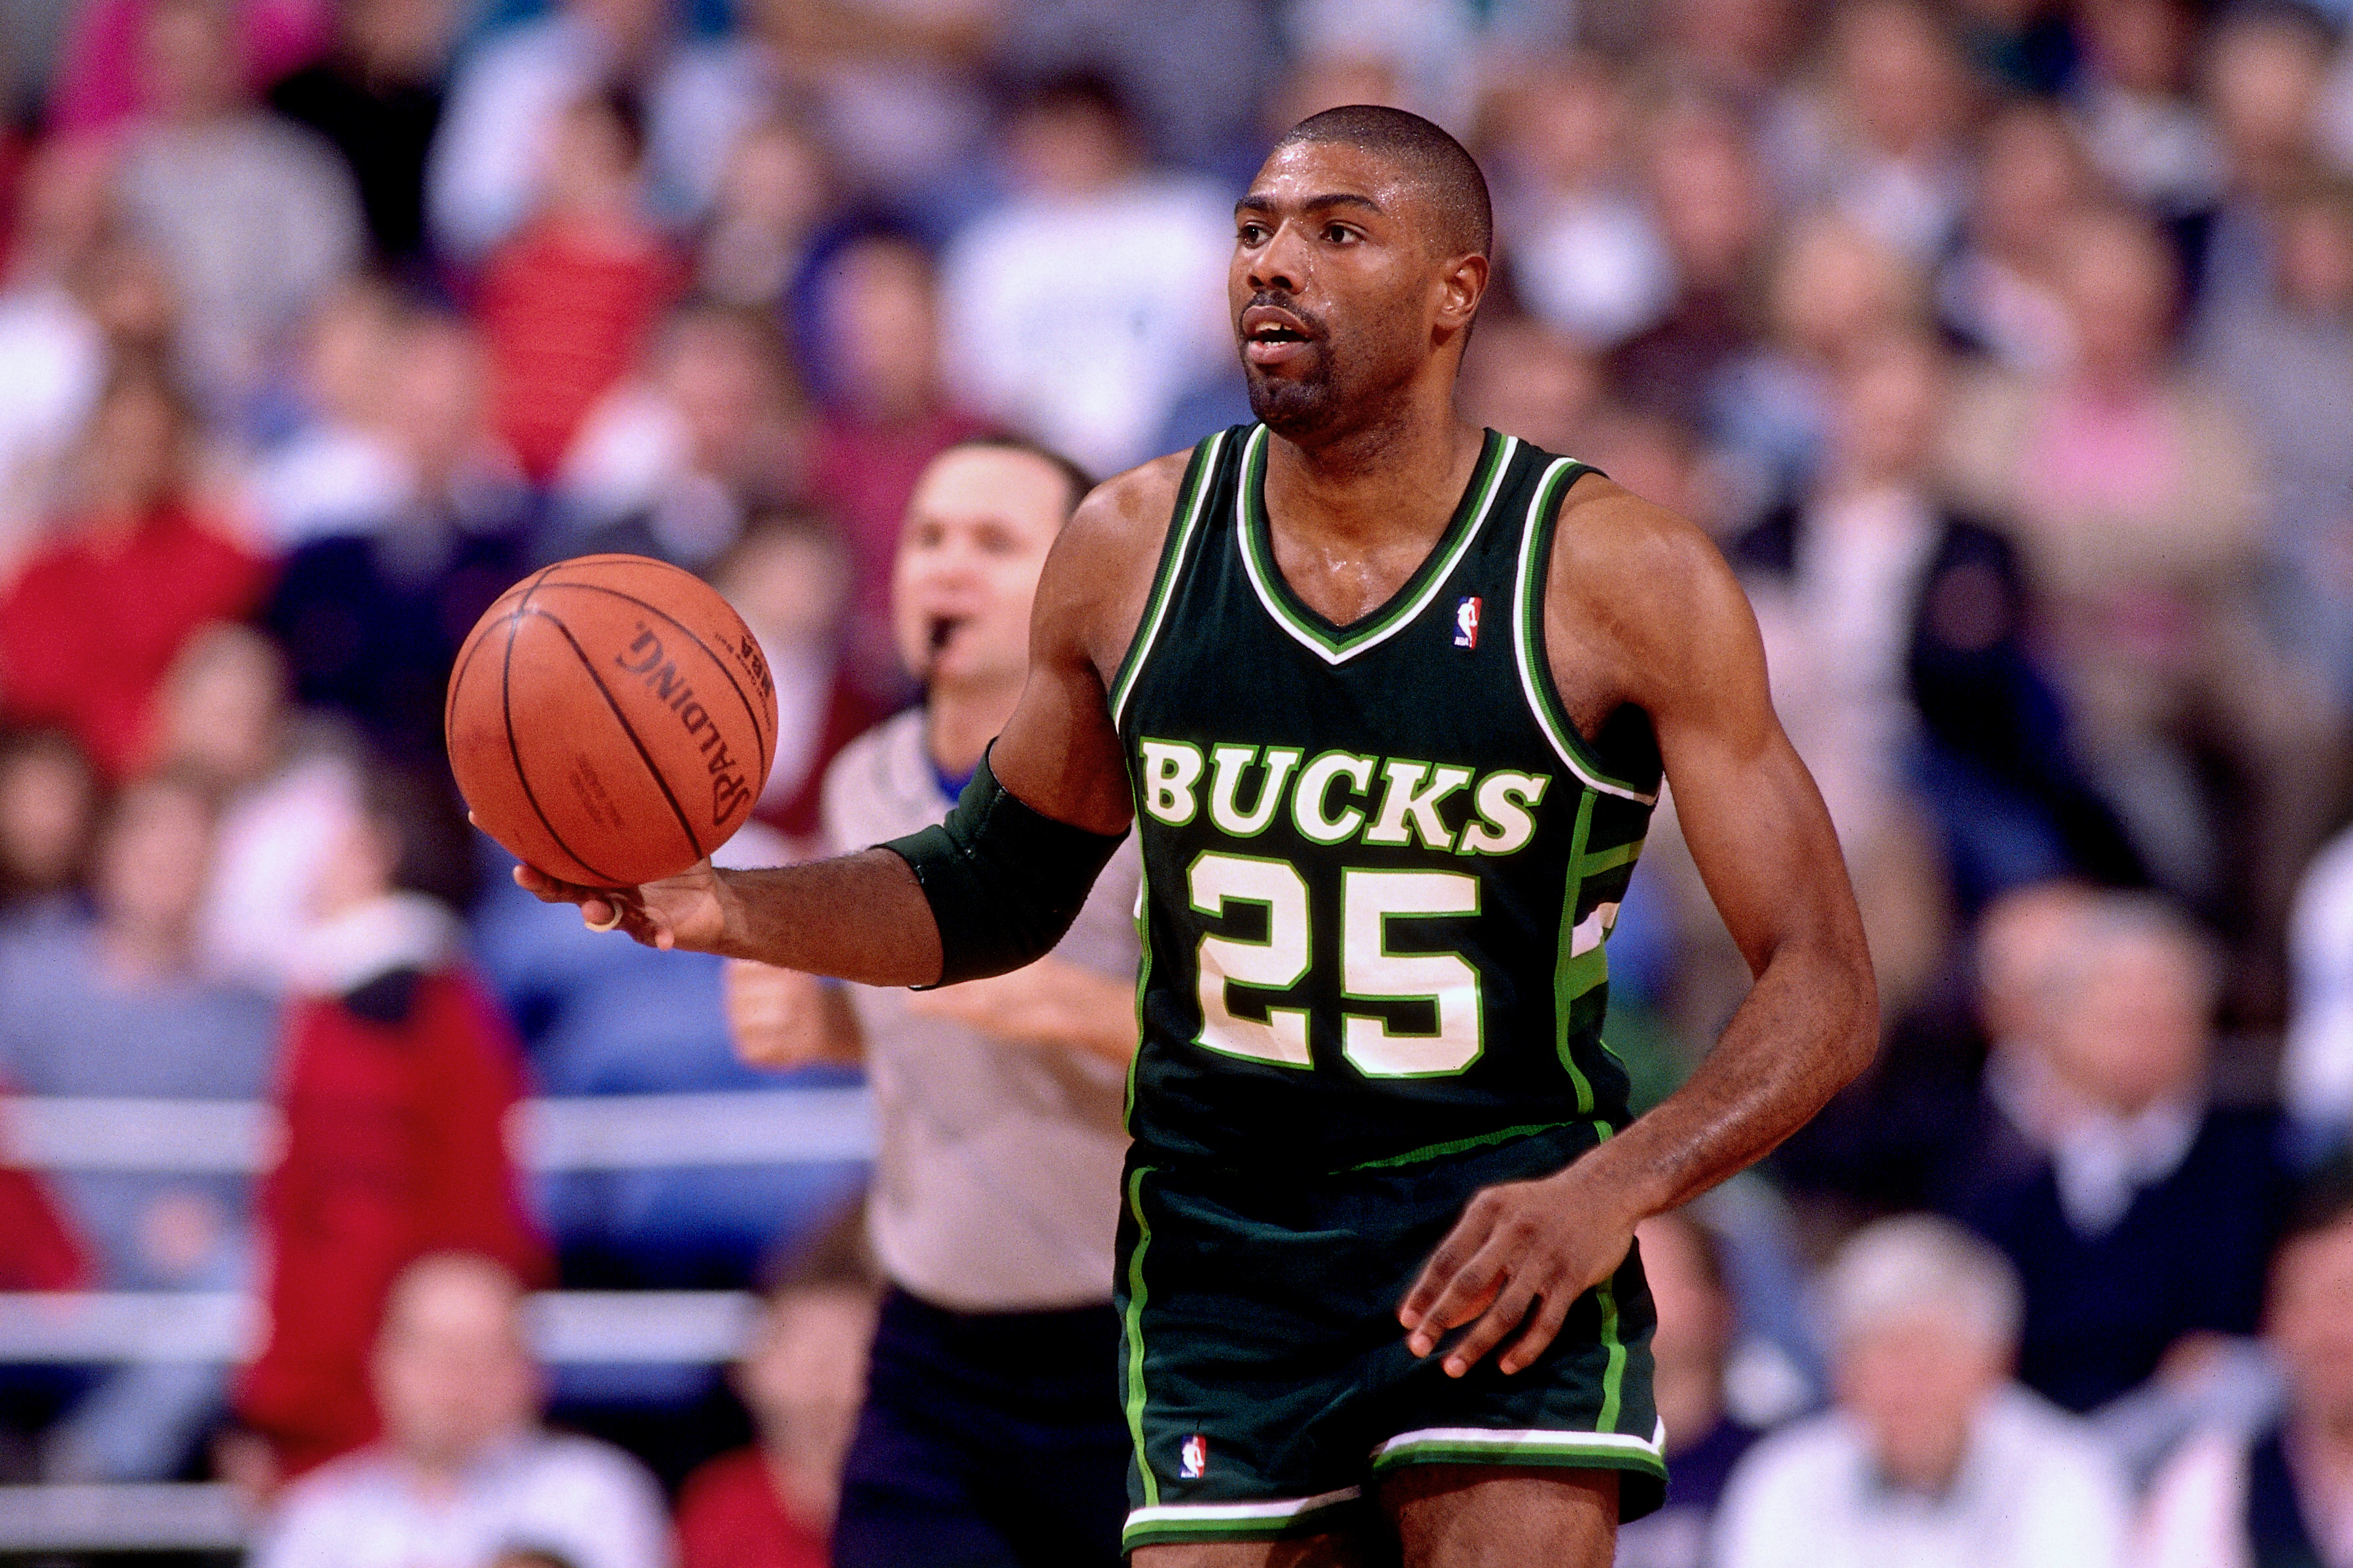 Milwaukee Bucks on X: On this date in 1990, the @Bucks retired